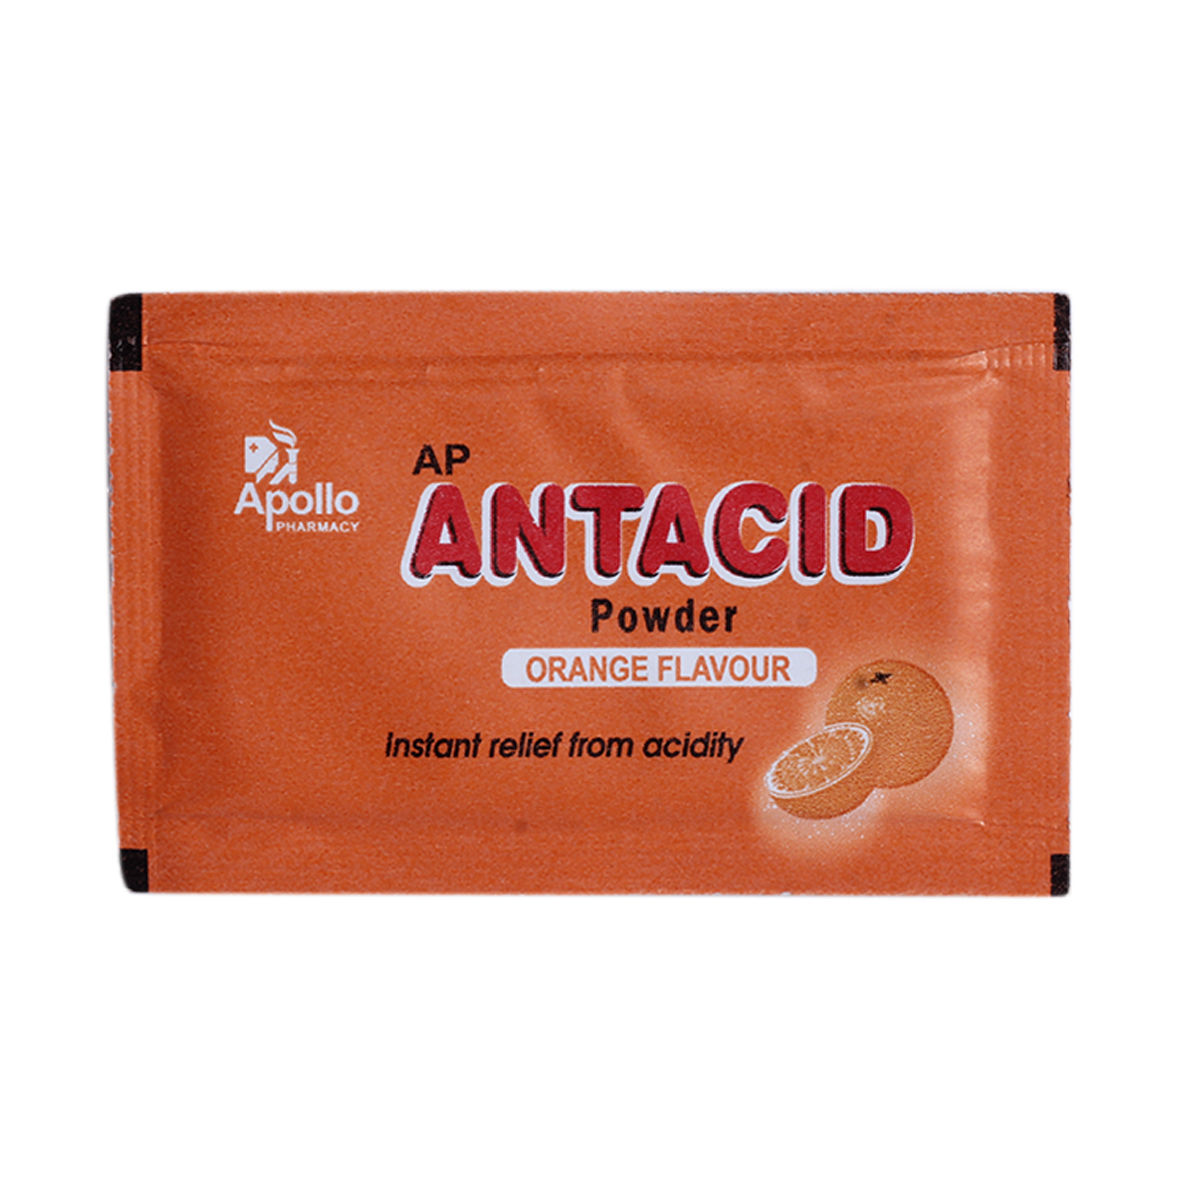 Apollo Pharmacy Orange Flavour Antacid Powder, 5 gm, Pack of 1 